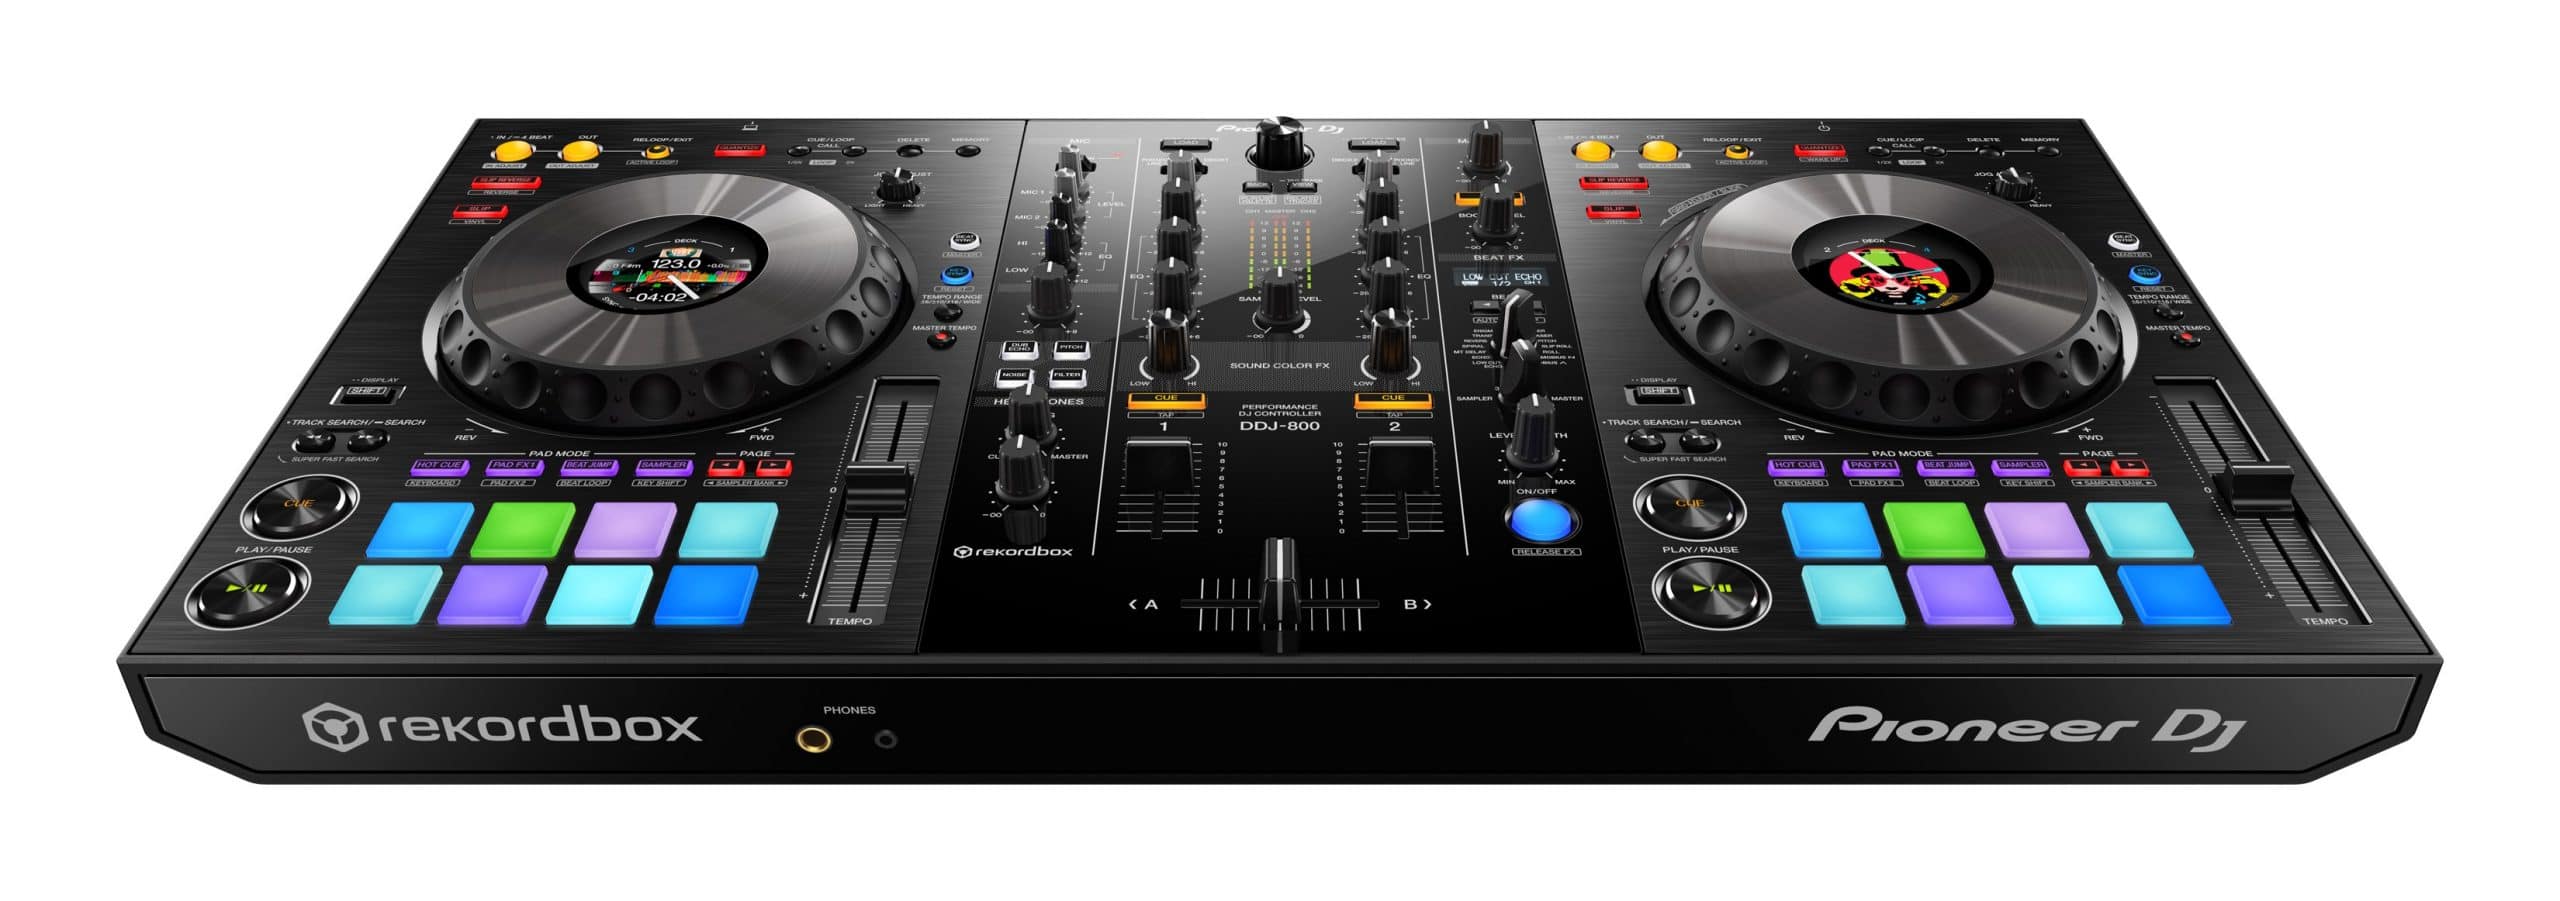 Pioneer DDJ-800 DJ controller for rekordbox dj